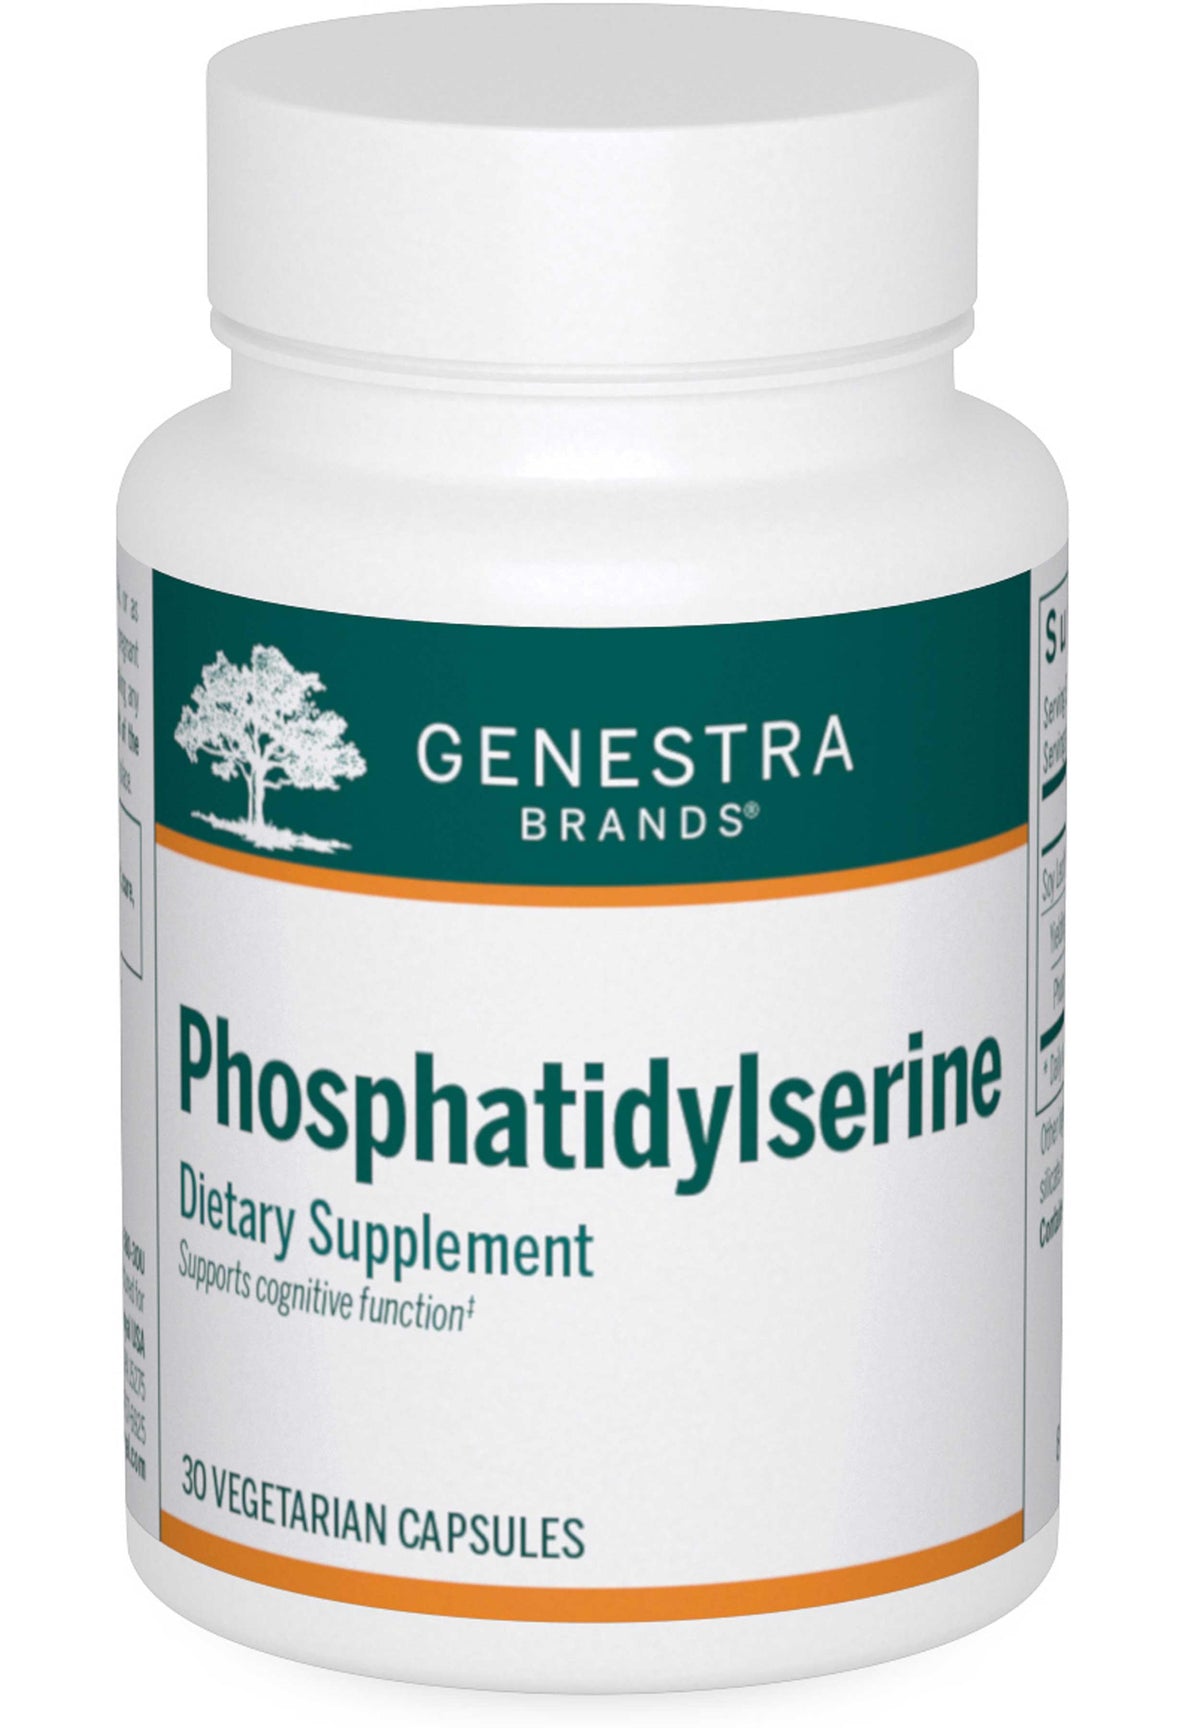 Genestra Phosphatidylserine 30 Veggie Caps Supplements at Village Vitamin Store